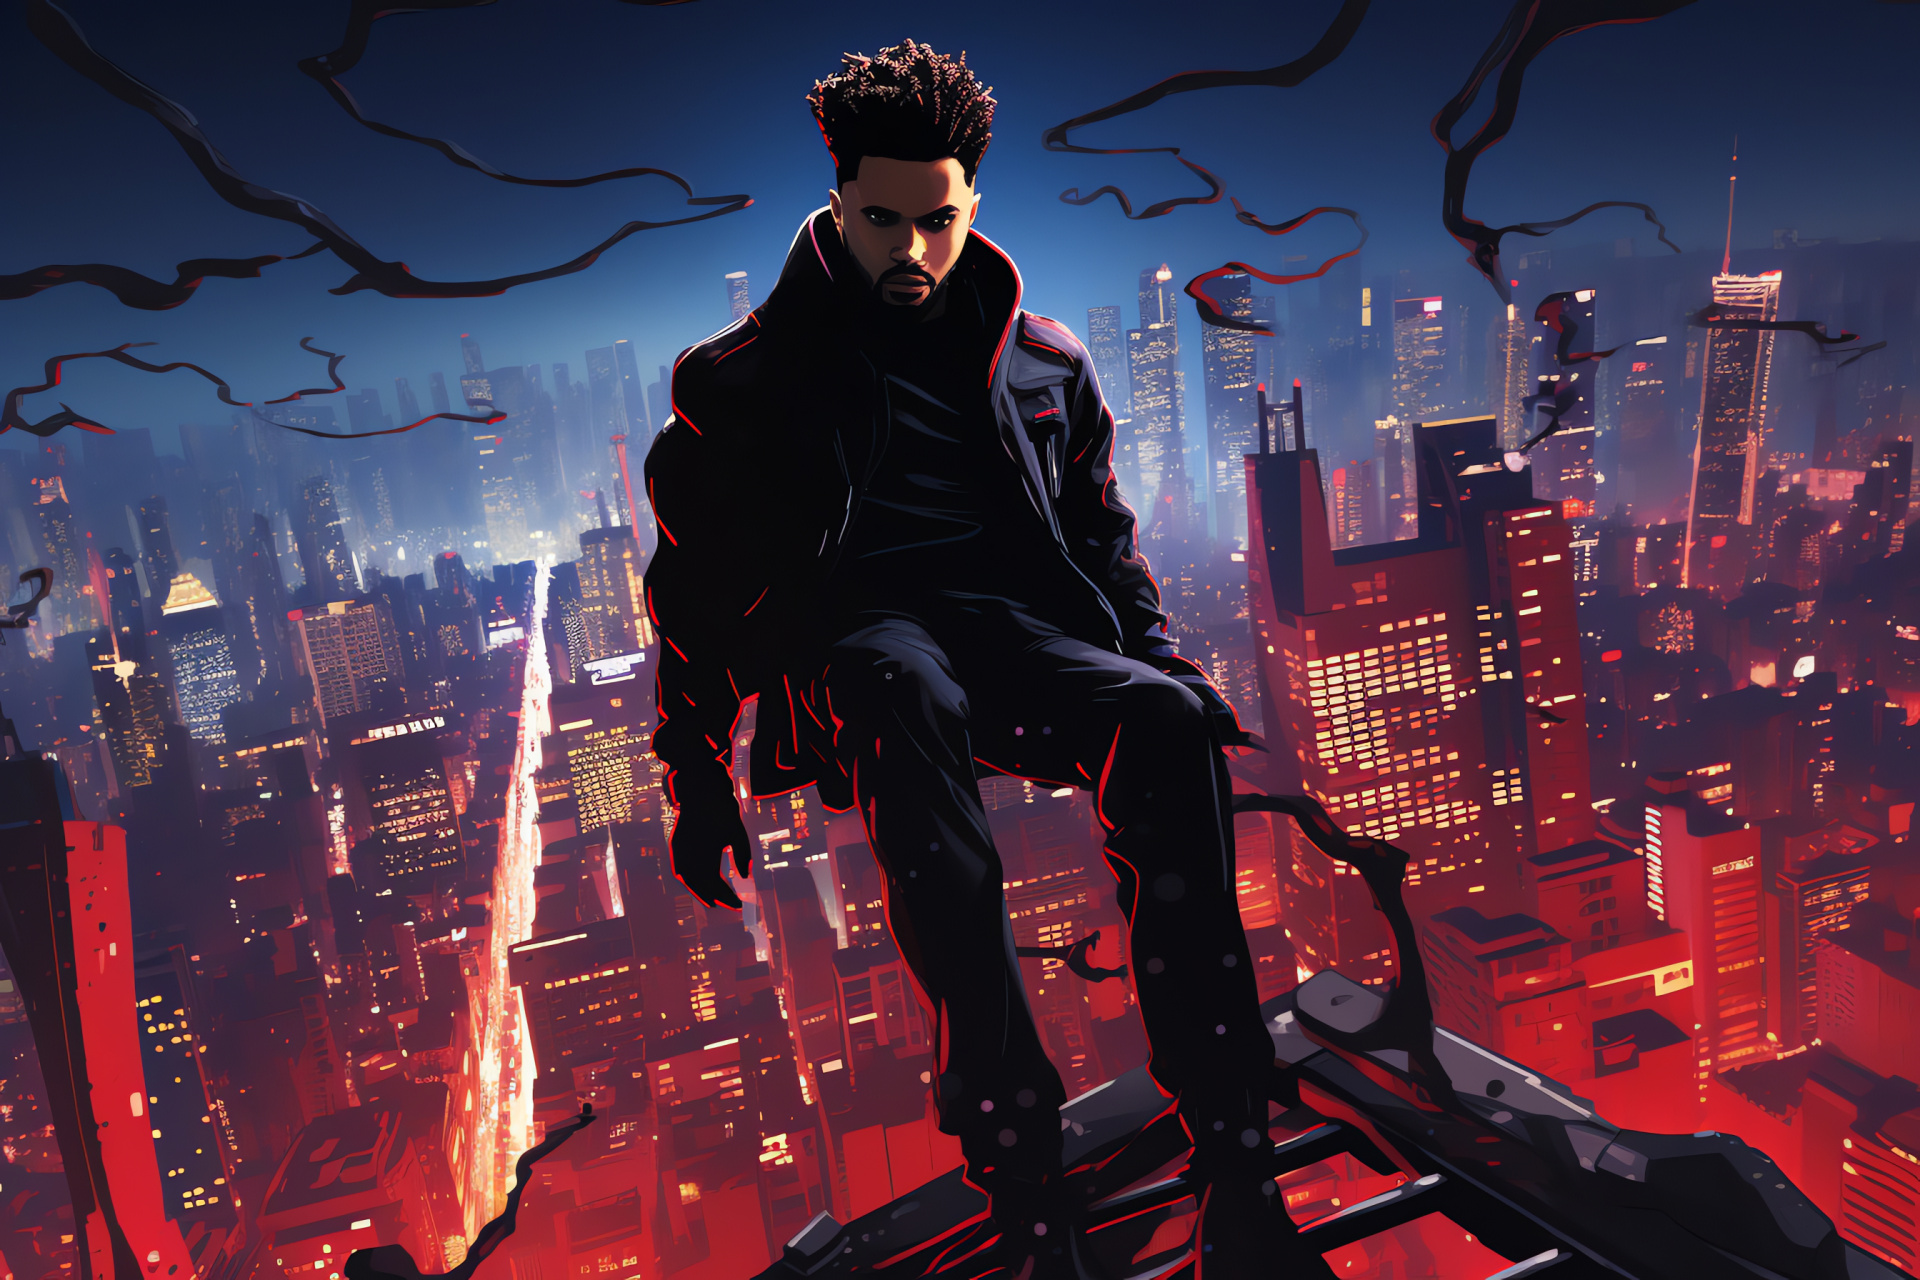 The Weeknd in Starboy era, futuristic urban landscape, modern sleek black attire, sophisticated music video shoot, HD Desktop Image